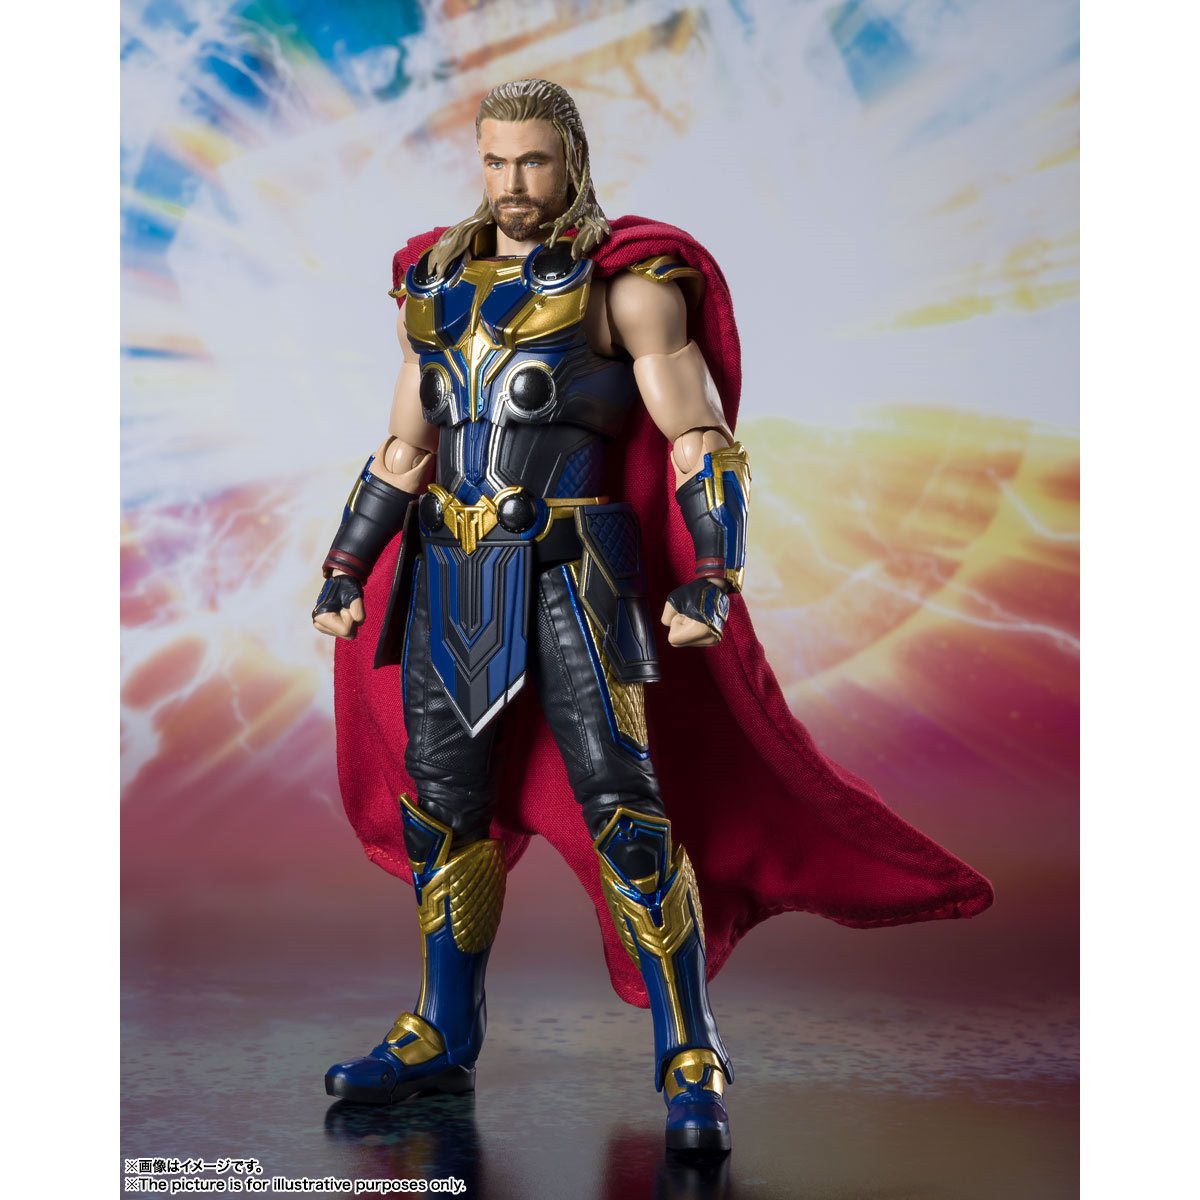 Bandai Tamashii SH Figuarts: Marvel Thor Love and Thunder - Thor Figura de Accion